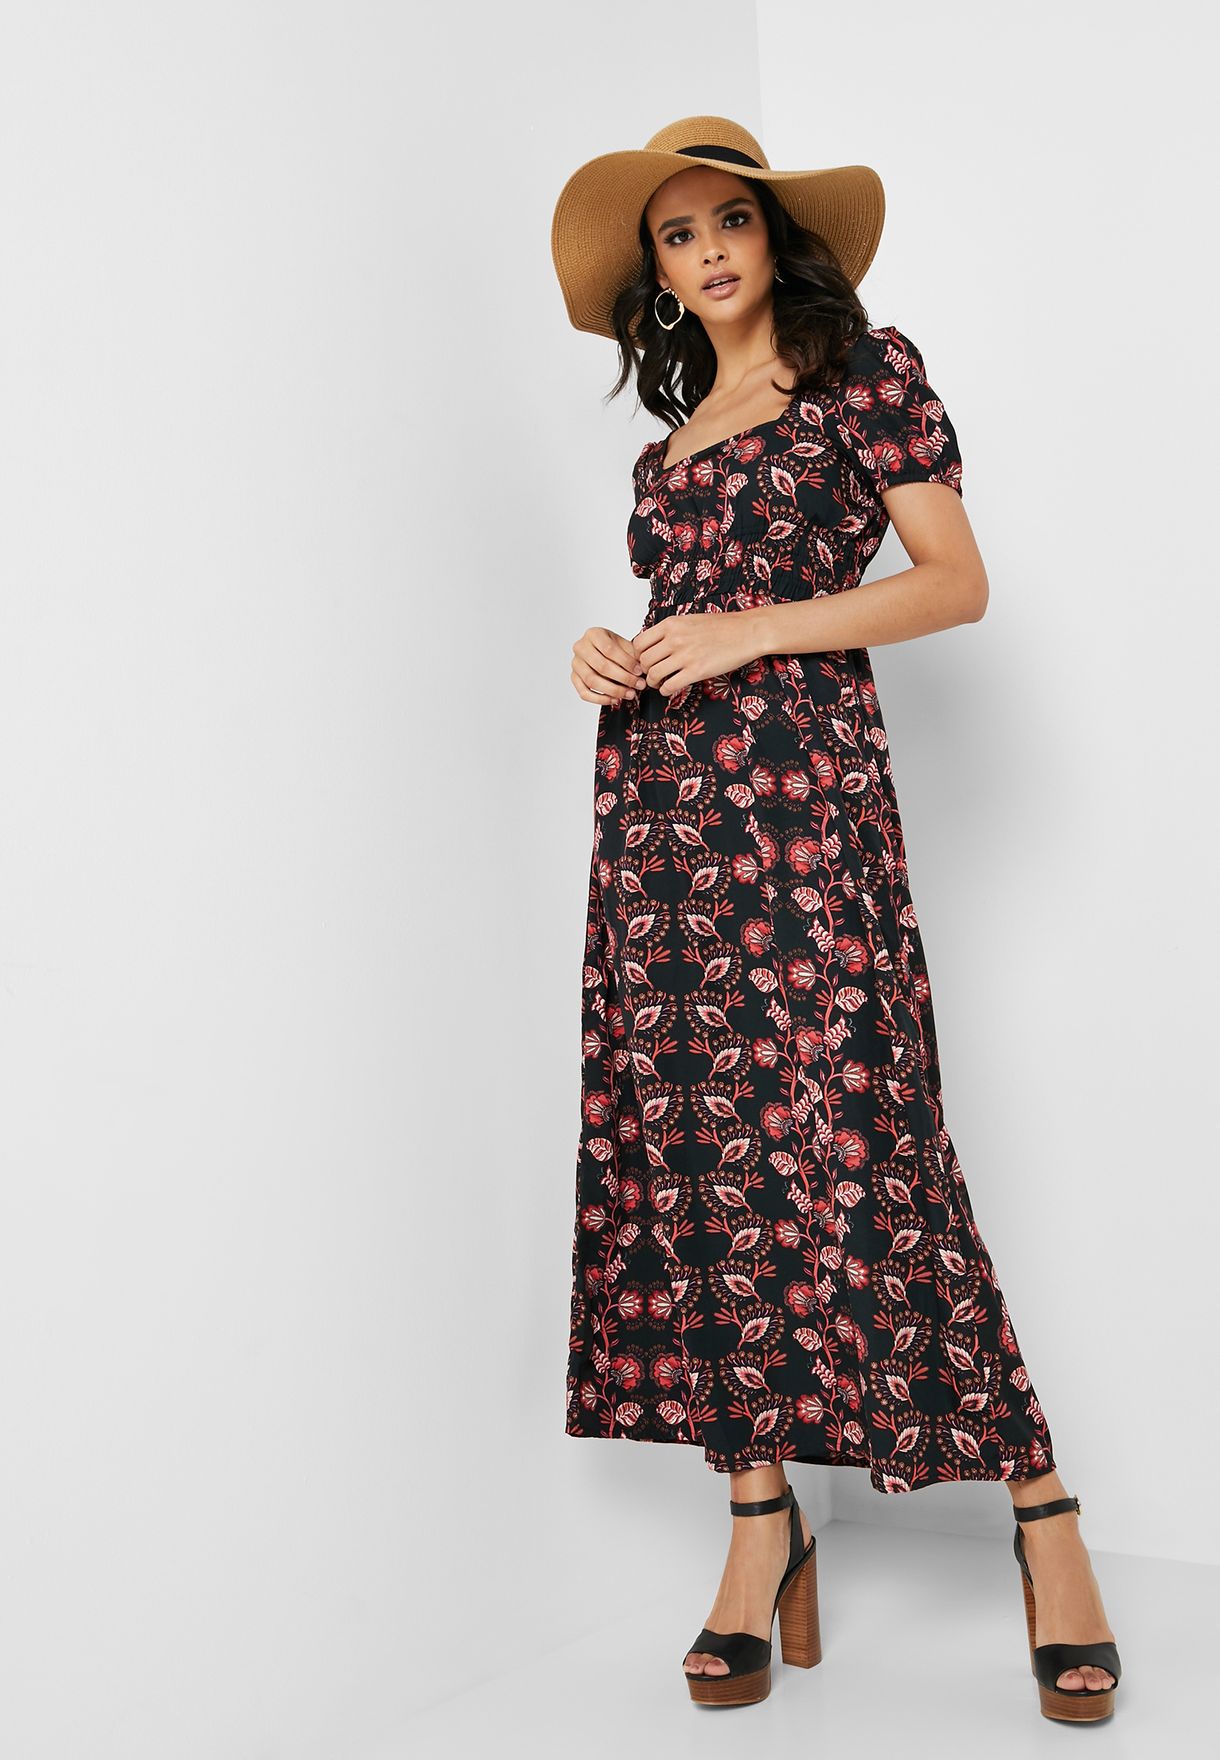 Vero Moda Floral Dress Flash Sales, 55 ...